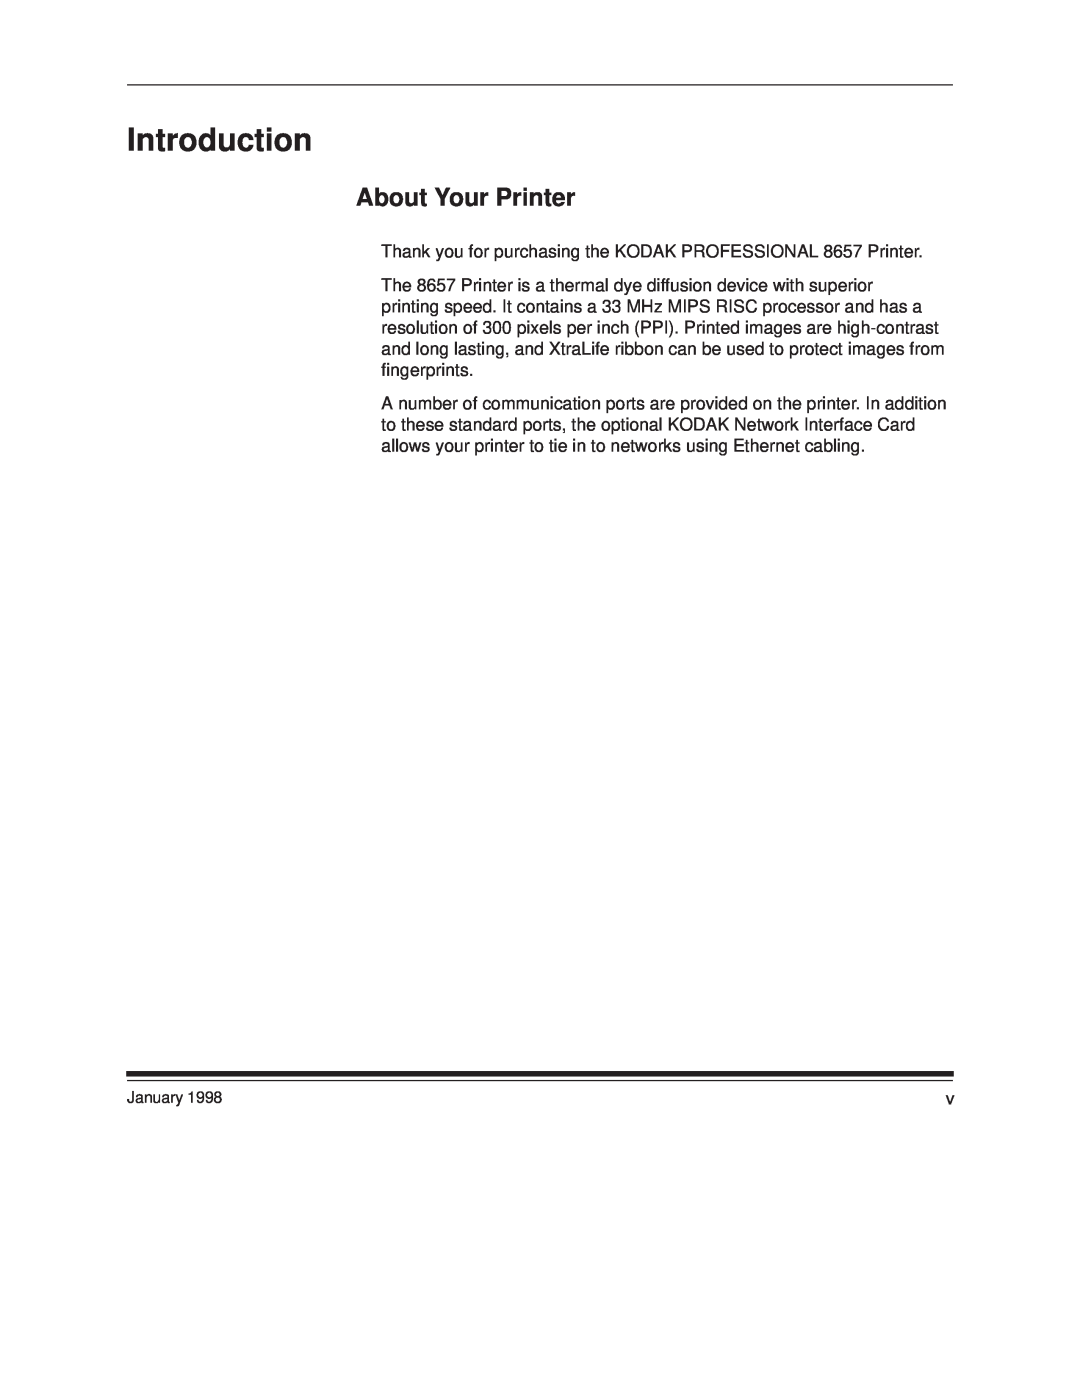 Kodak 8657 manual Introduction, About Your Printer 